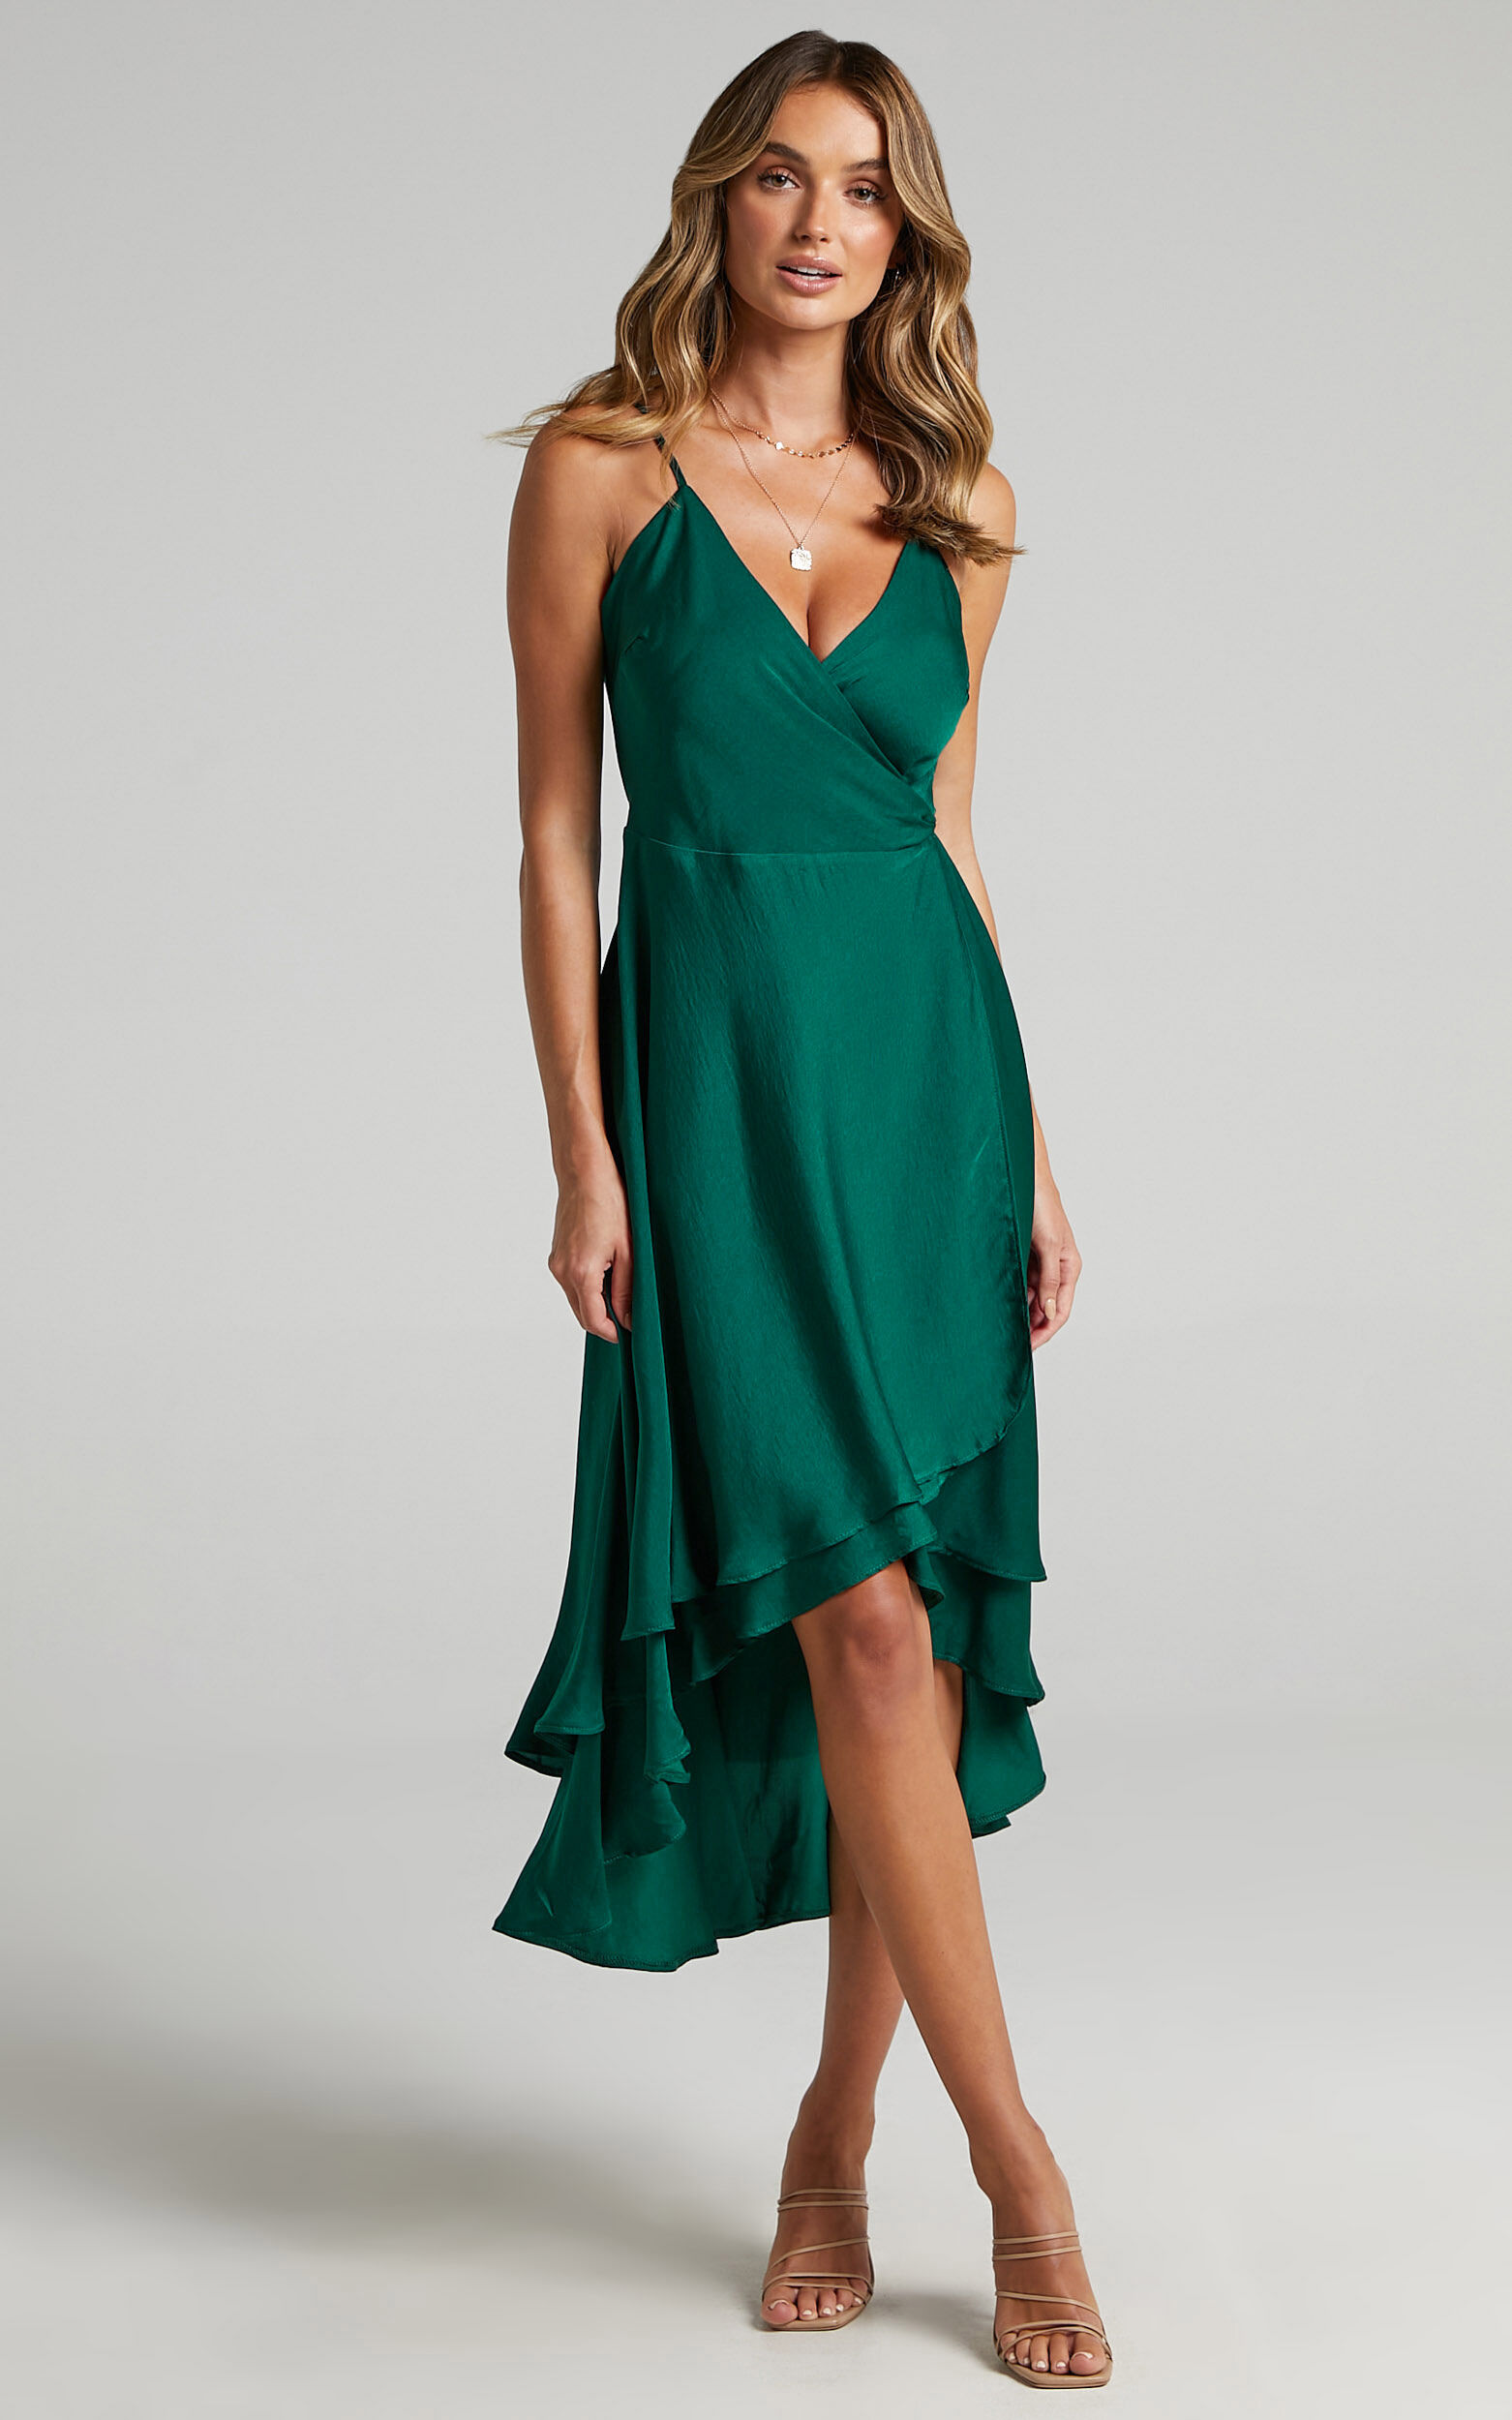 Satin Clothing | Buy Satin Dresses, Tops \u0026 Skirts | Showpo